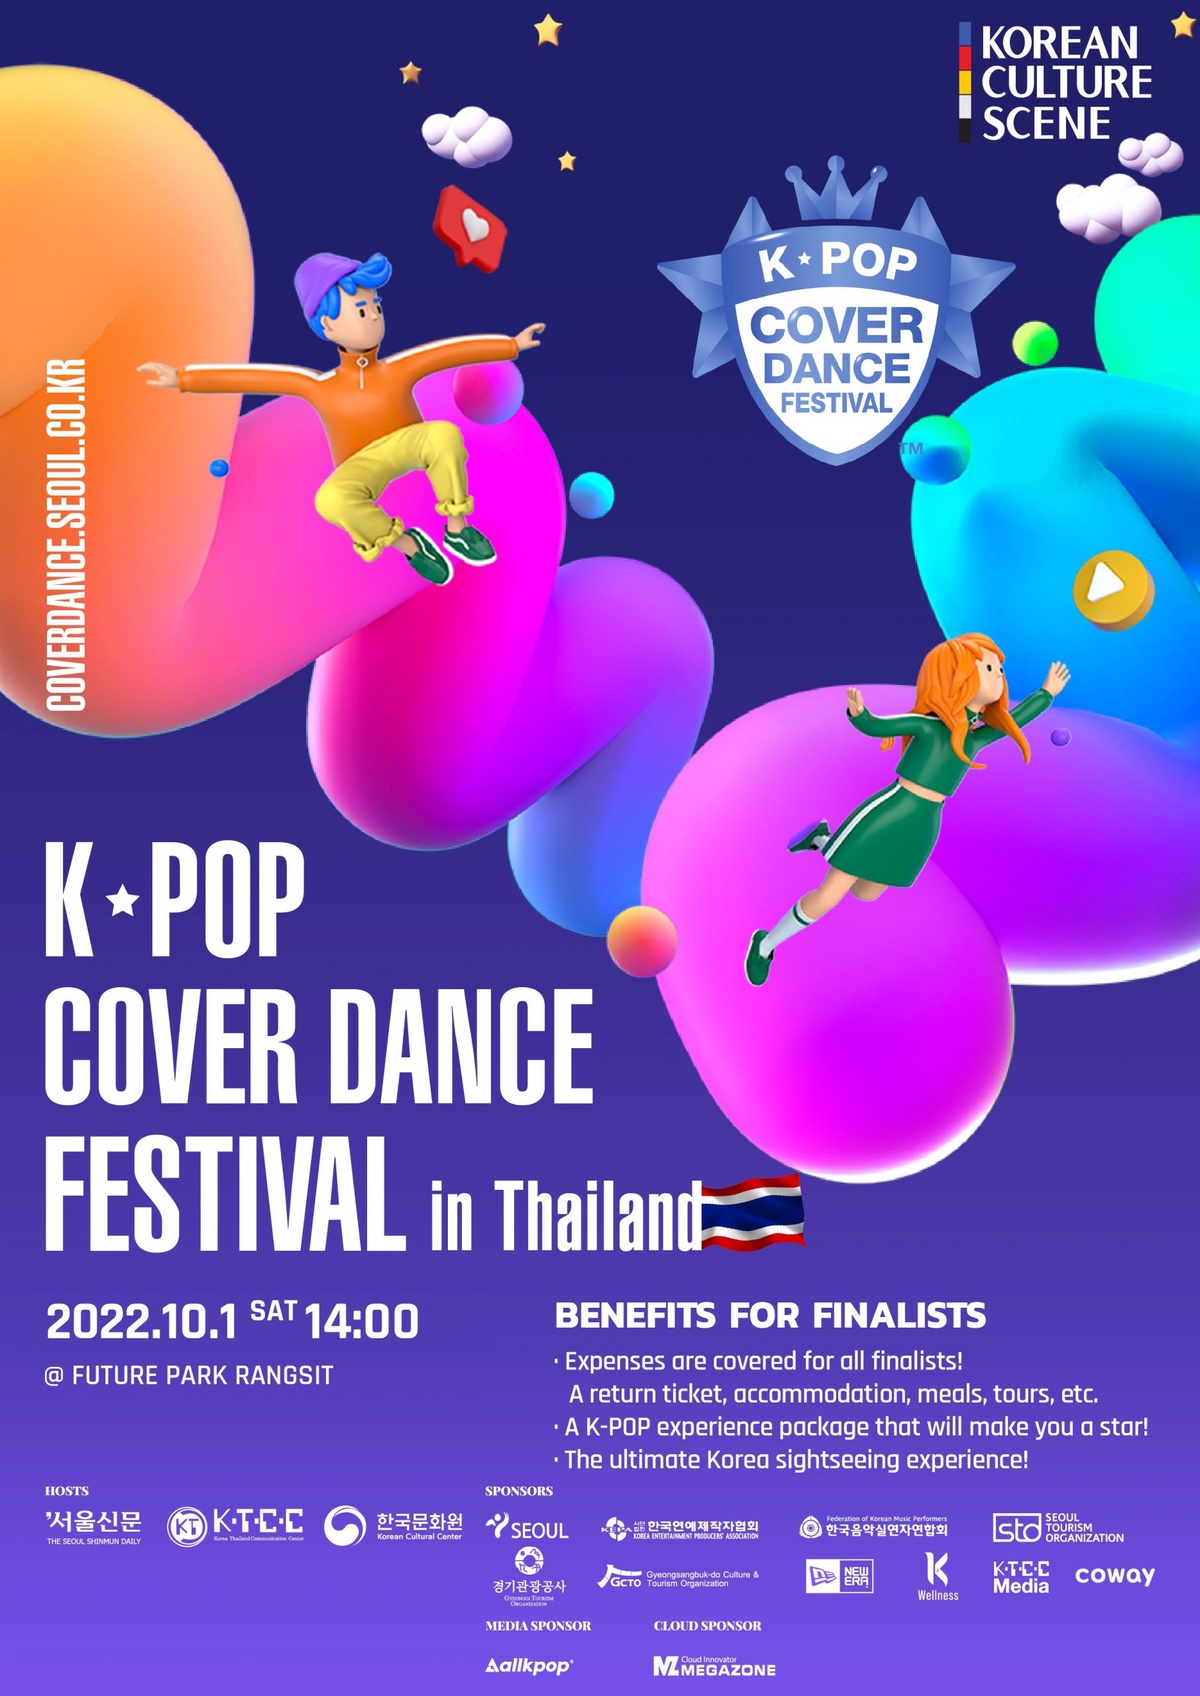 Catch the Chance to go Korea เปิดเวทีการแข่งขัน K-POP Cover Dance Festival in Thailand 2022 เพื่อเฟ้นหาตัวแทนประเทศไทย